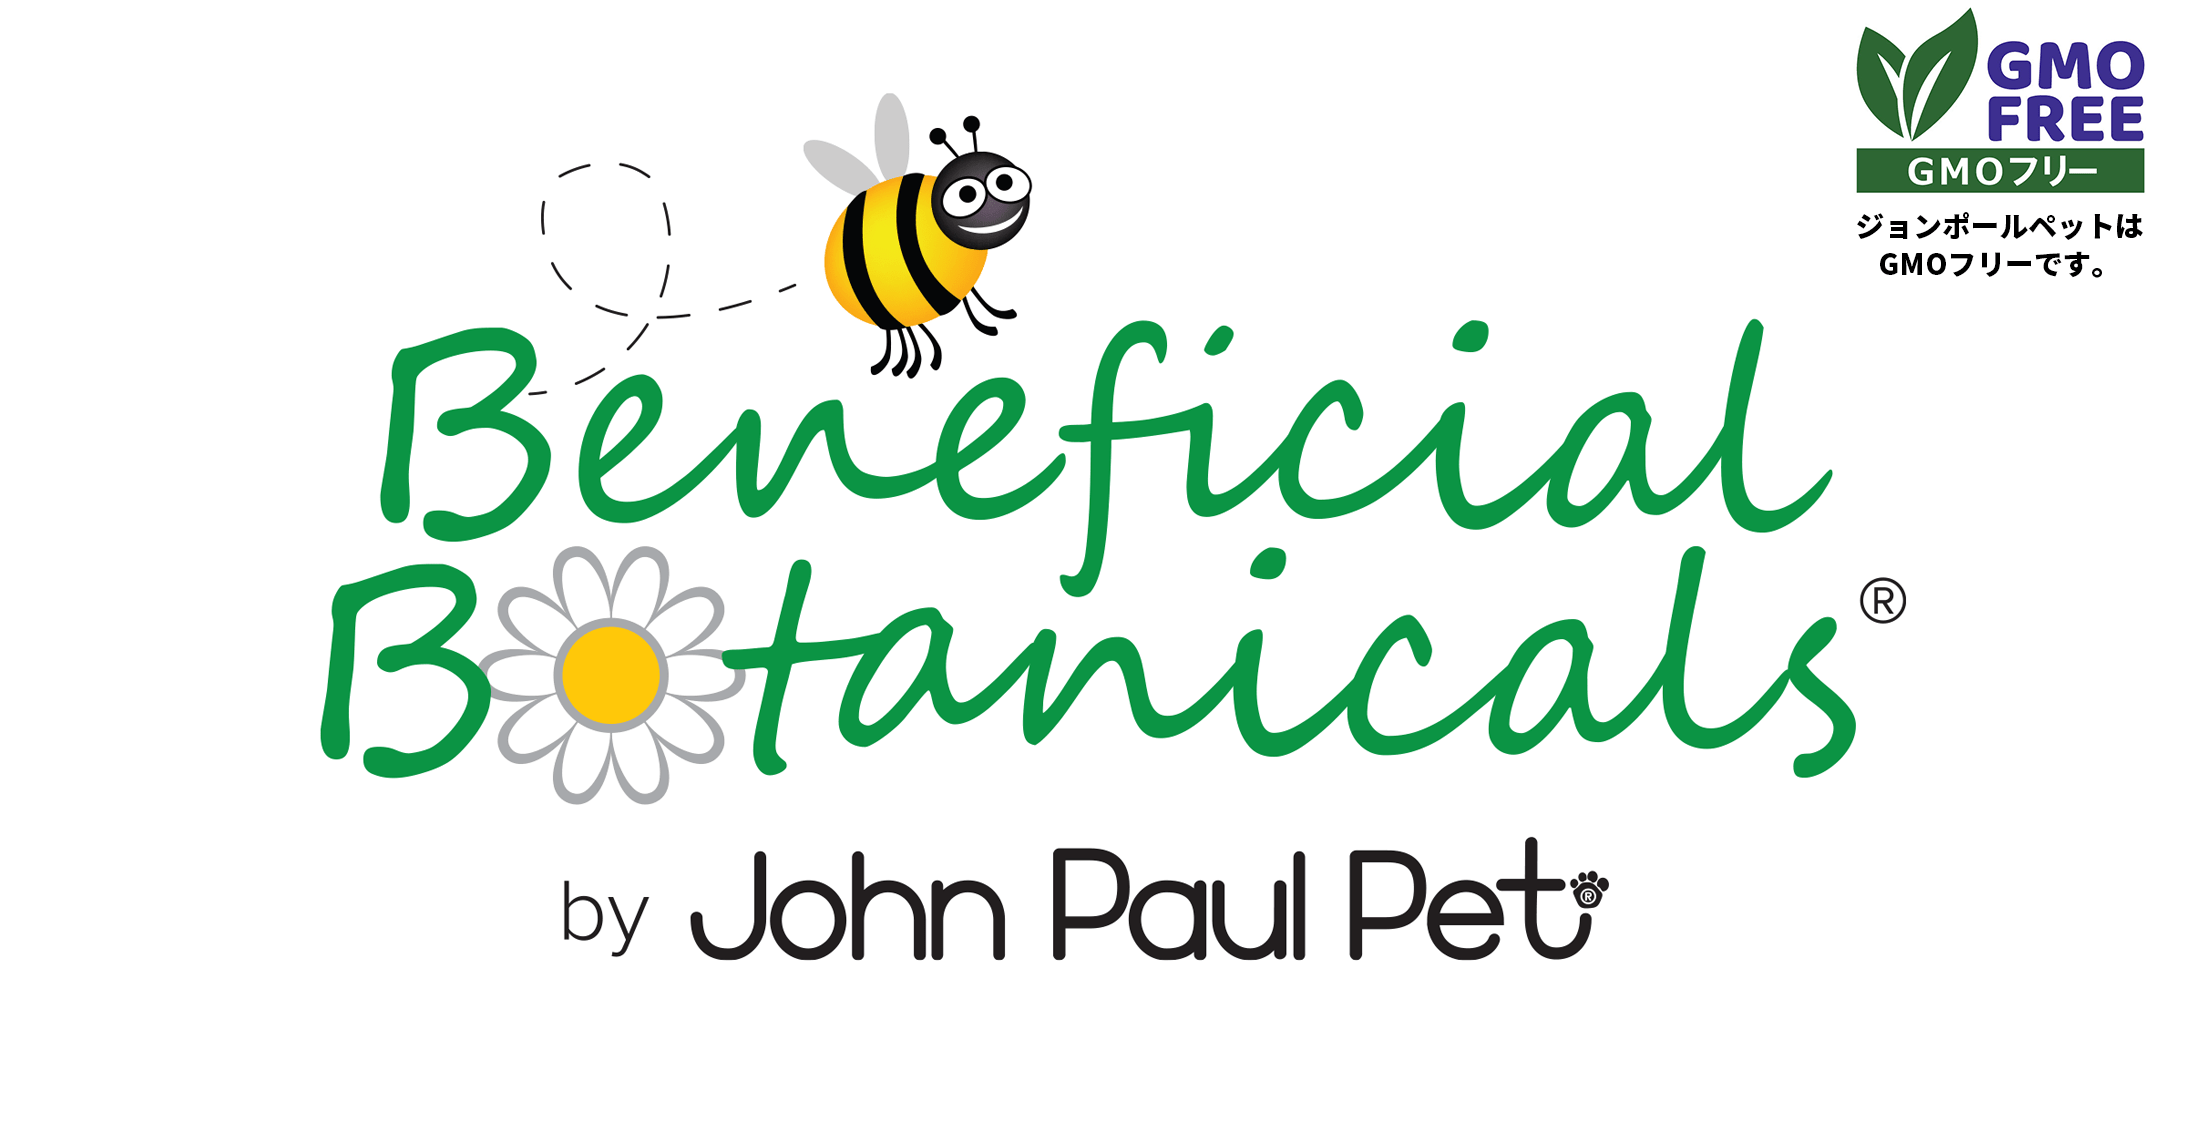 John Paul pet - ジョンポールペット  ジョン・ポールがプロデュースする高級ペット用品ブランド